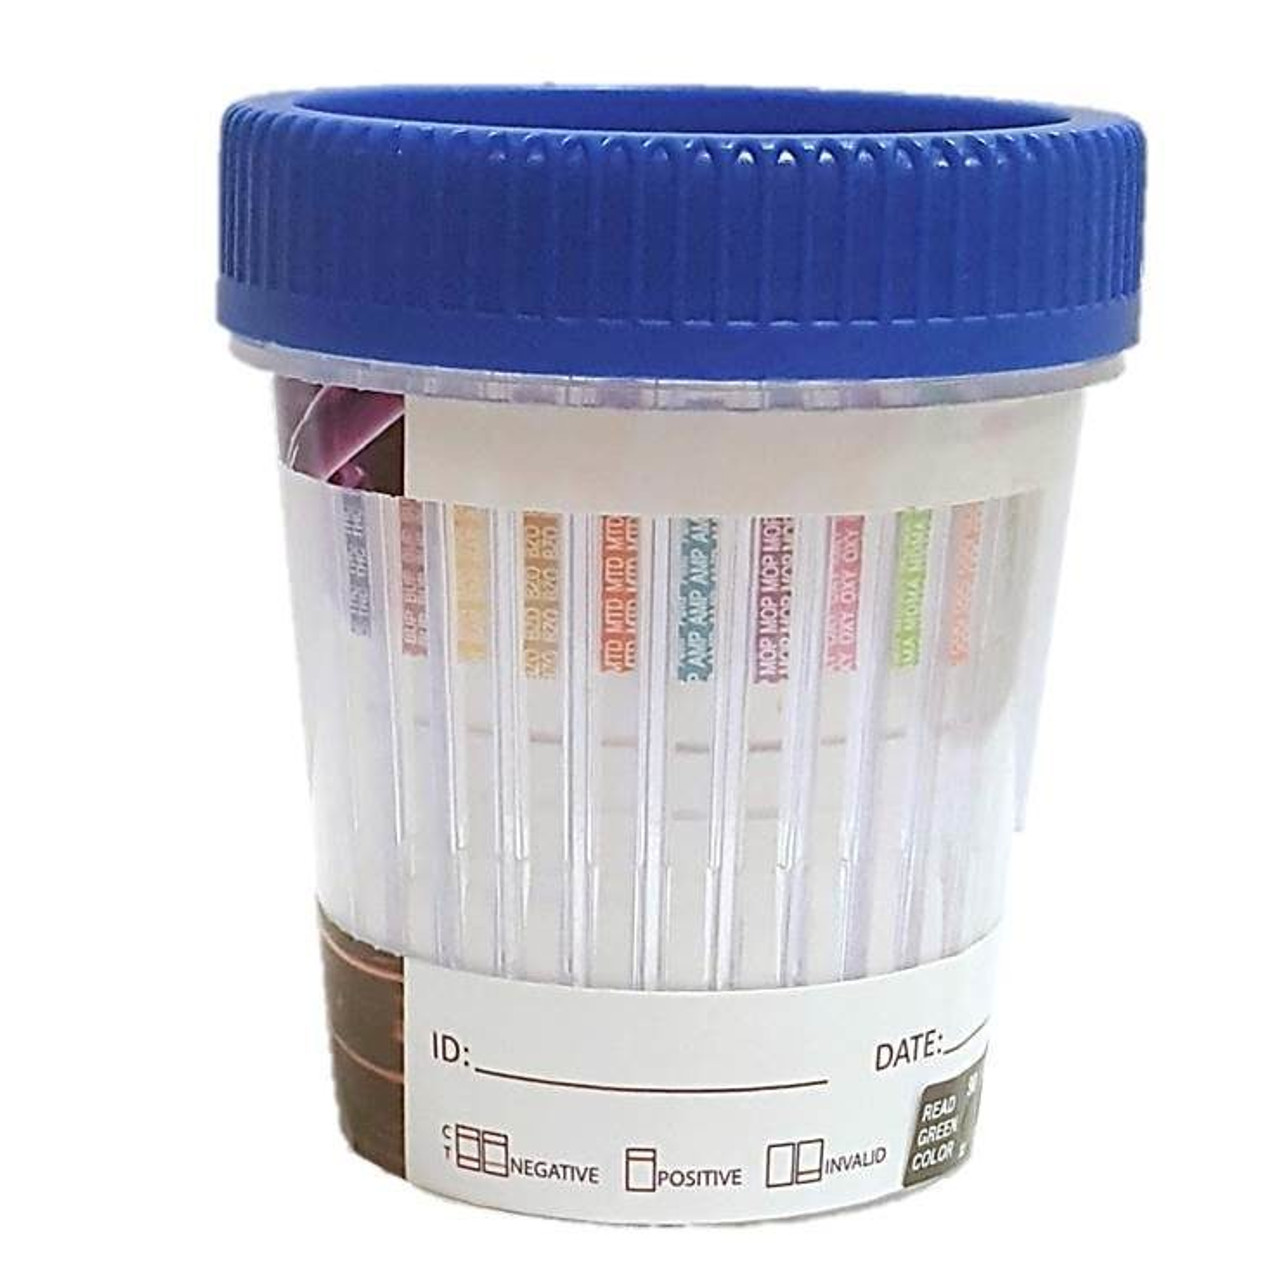 12 Panel + Adulterants Urine Drug Tapered Test Cup 25/box